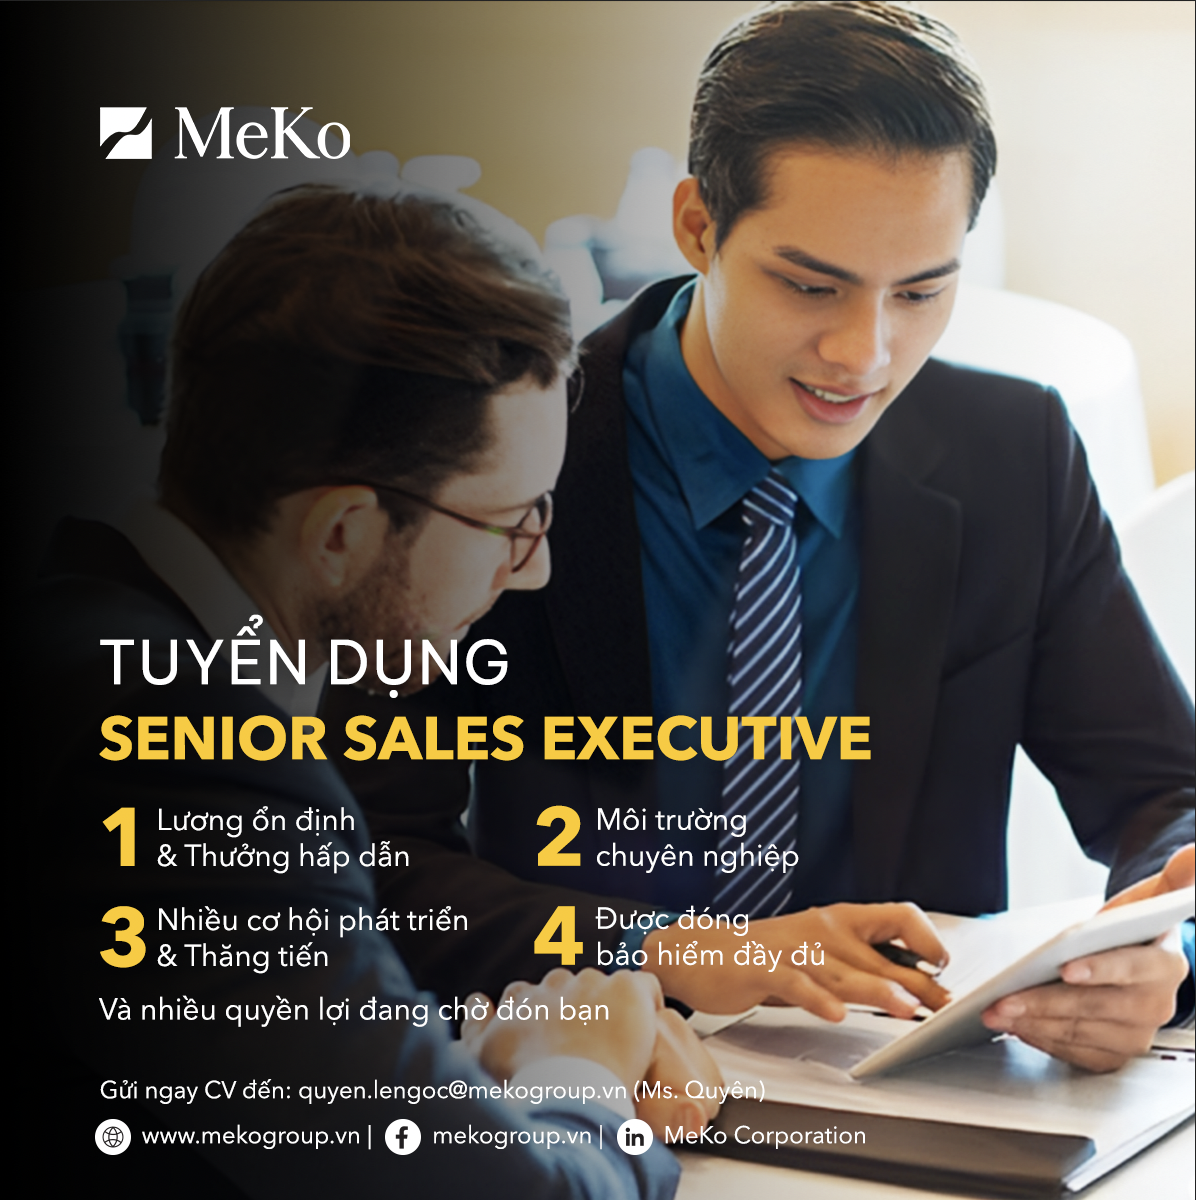 Tuyển dụng vị trí Senior Sales Executive